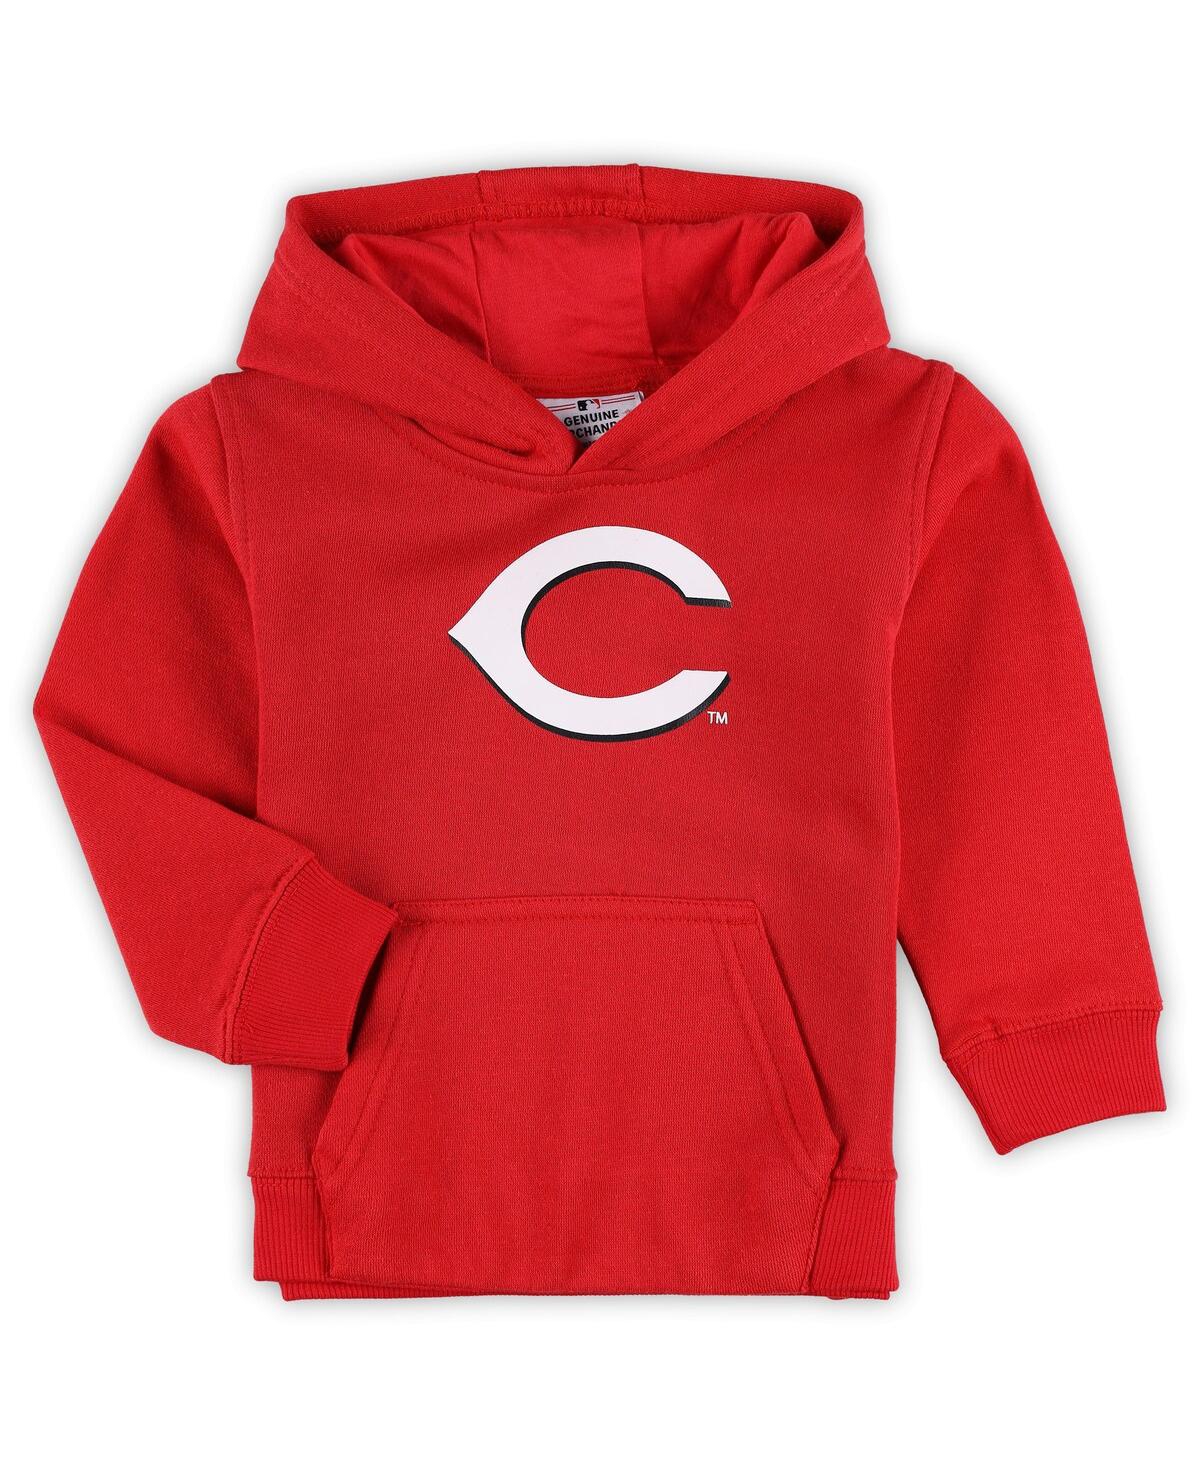 Outerstuff Babies' Toddler Boys And Girls Red Cincinnati Reds Team Primary Logo Fleece Pullover Hoodie